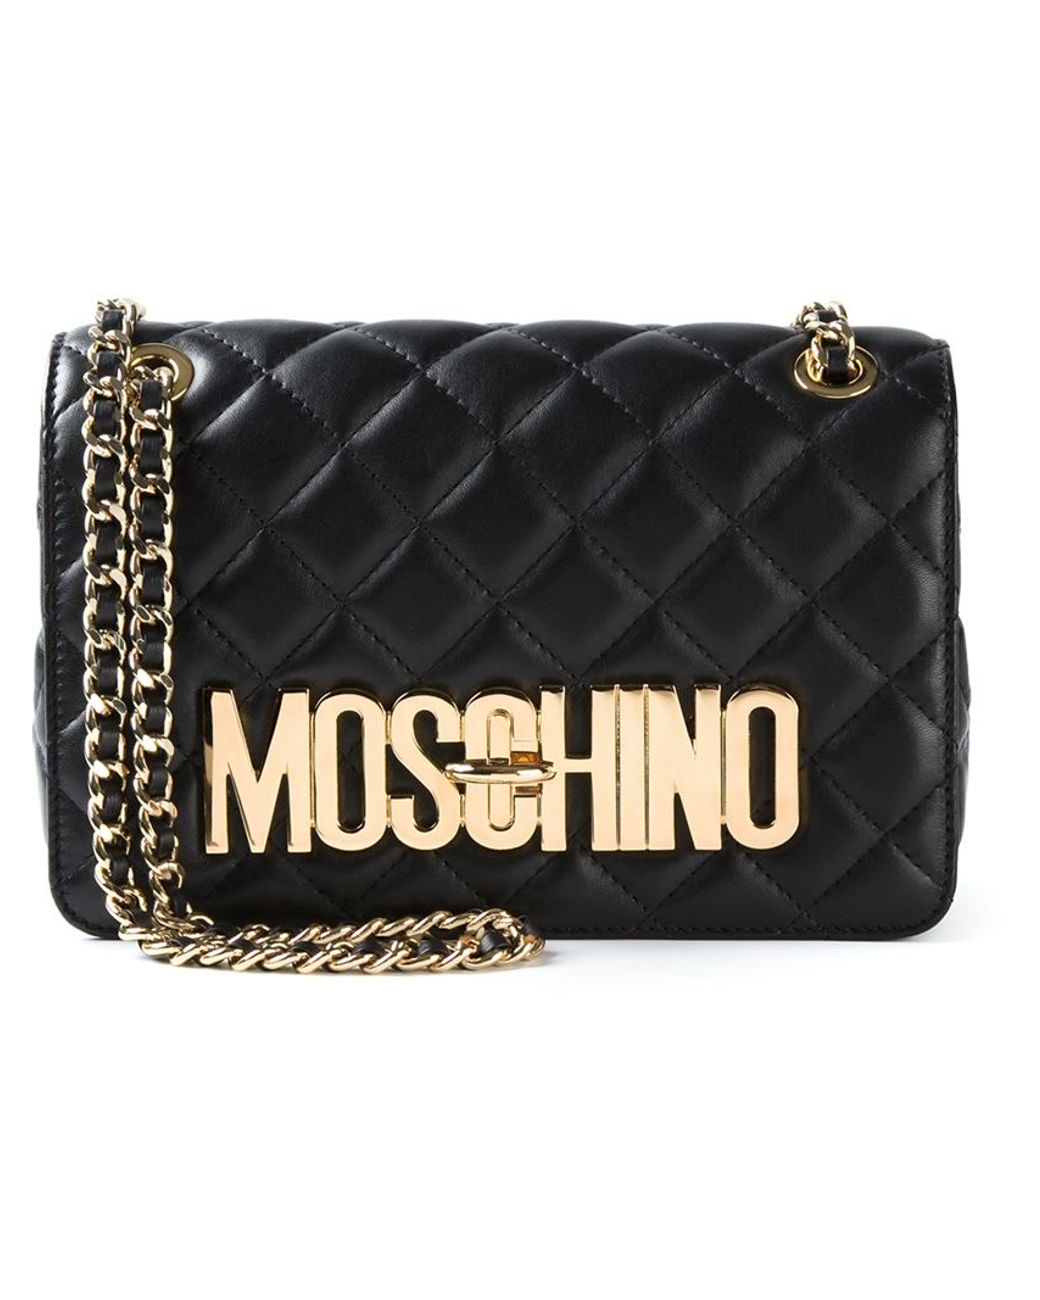 Moschino Quilted Sheepskin Shoulder Bag in Black | Lyst